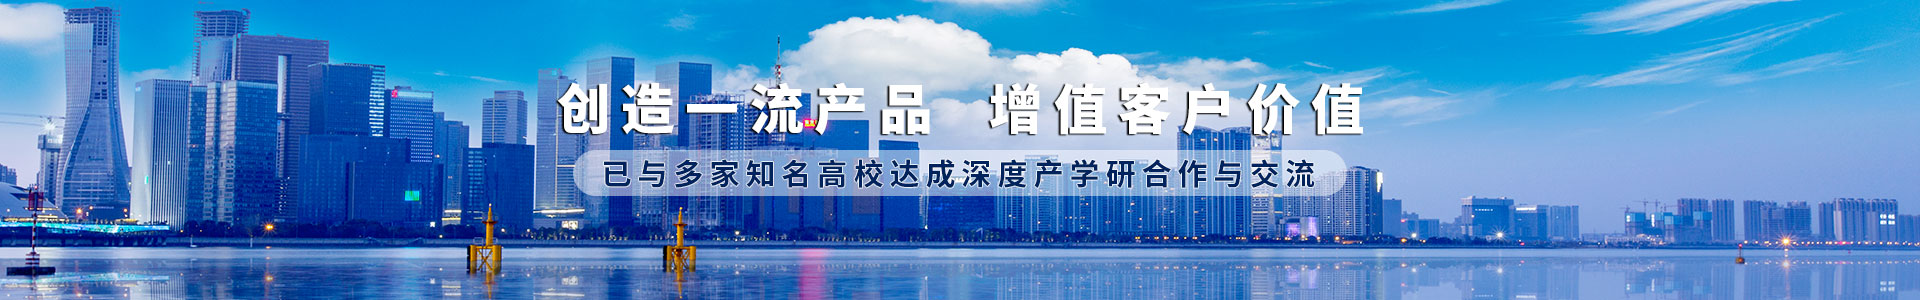 BB电子·(china)官方网站_image7219